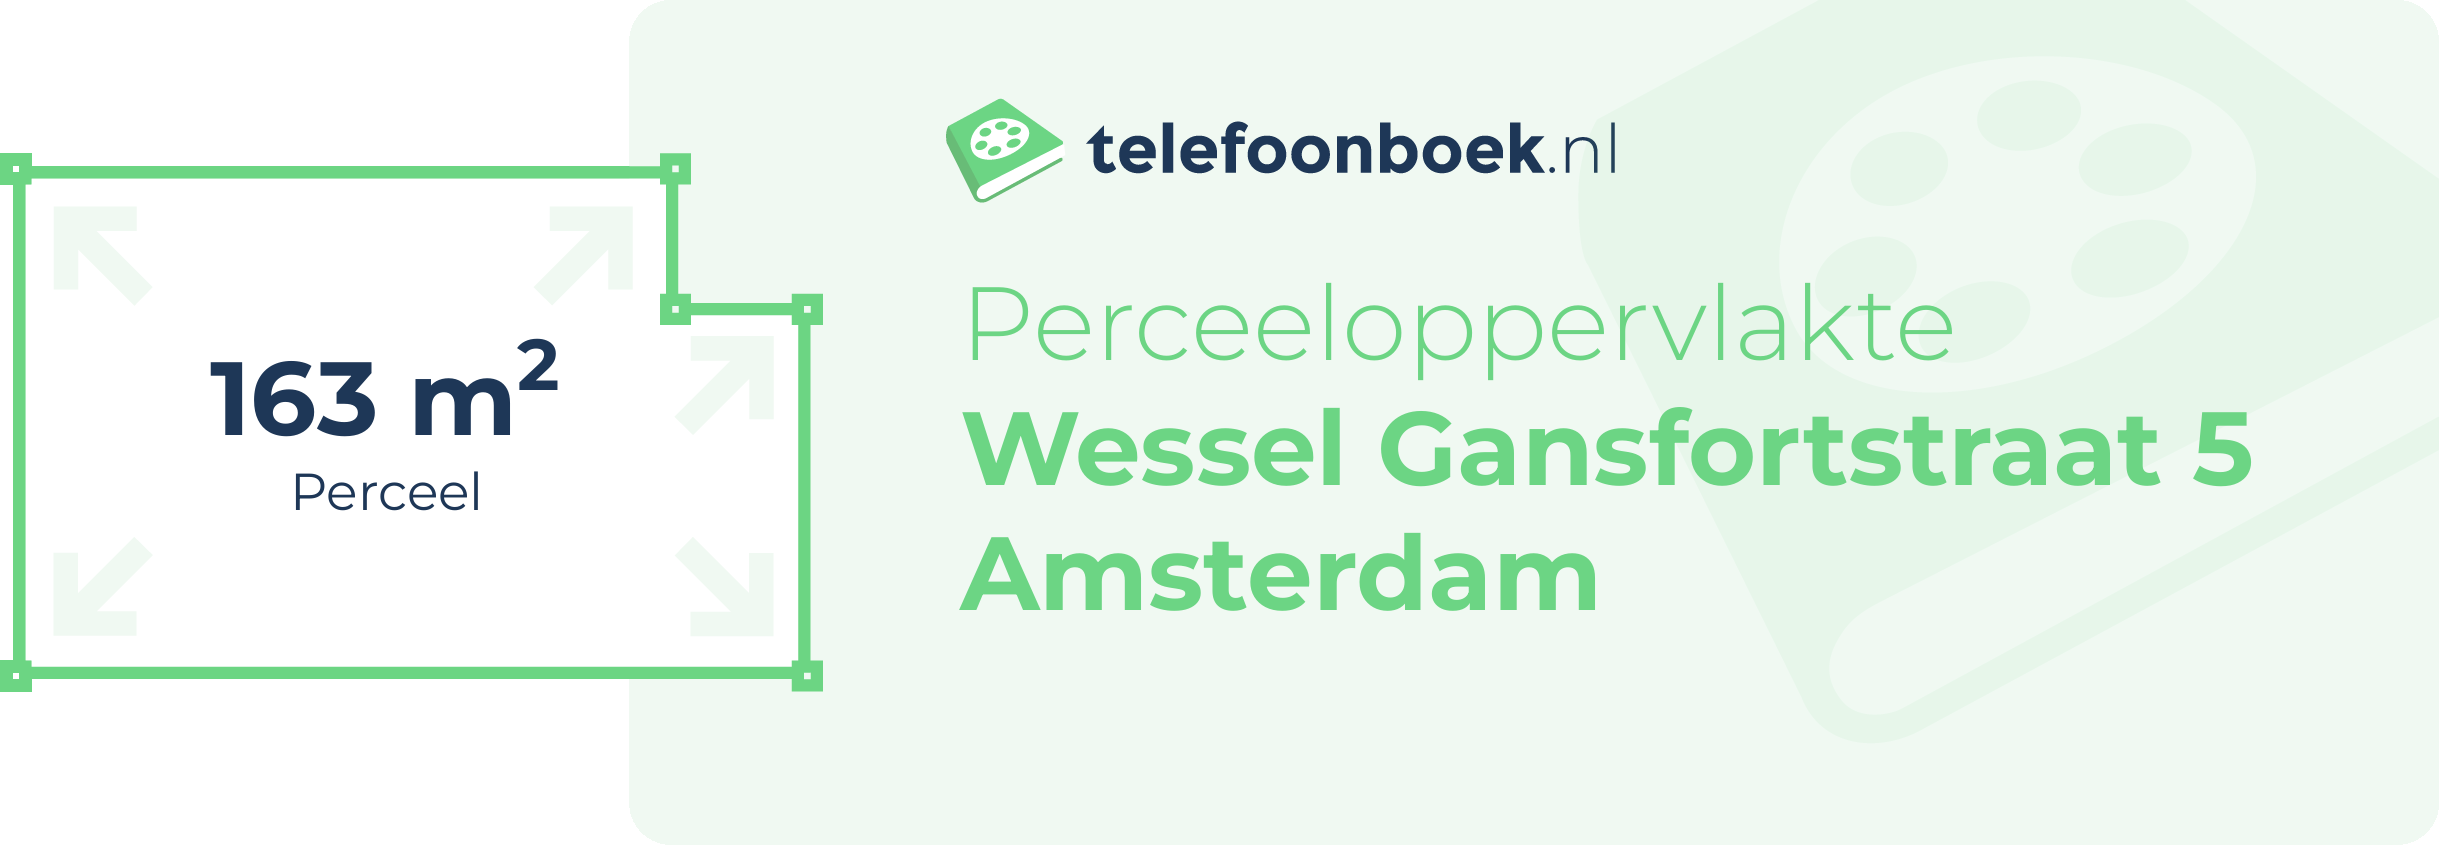 Perceeloppervlakte Wessel Gansfortstraat 5 Amsterdam